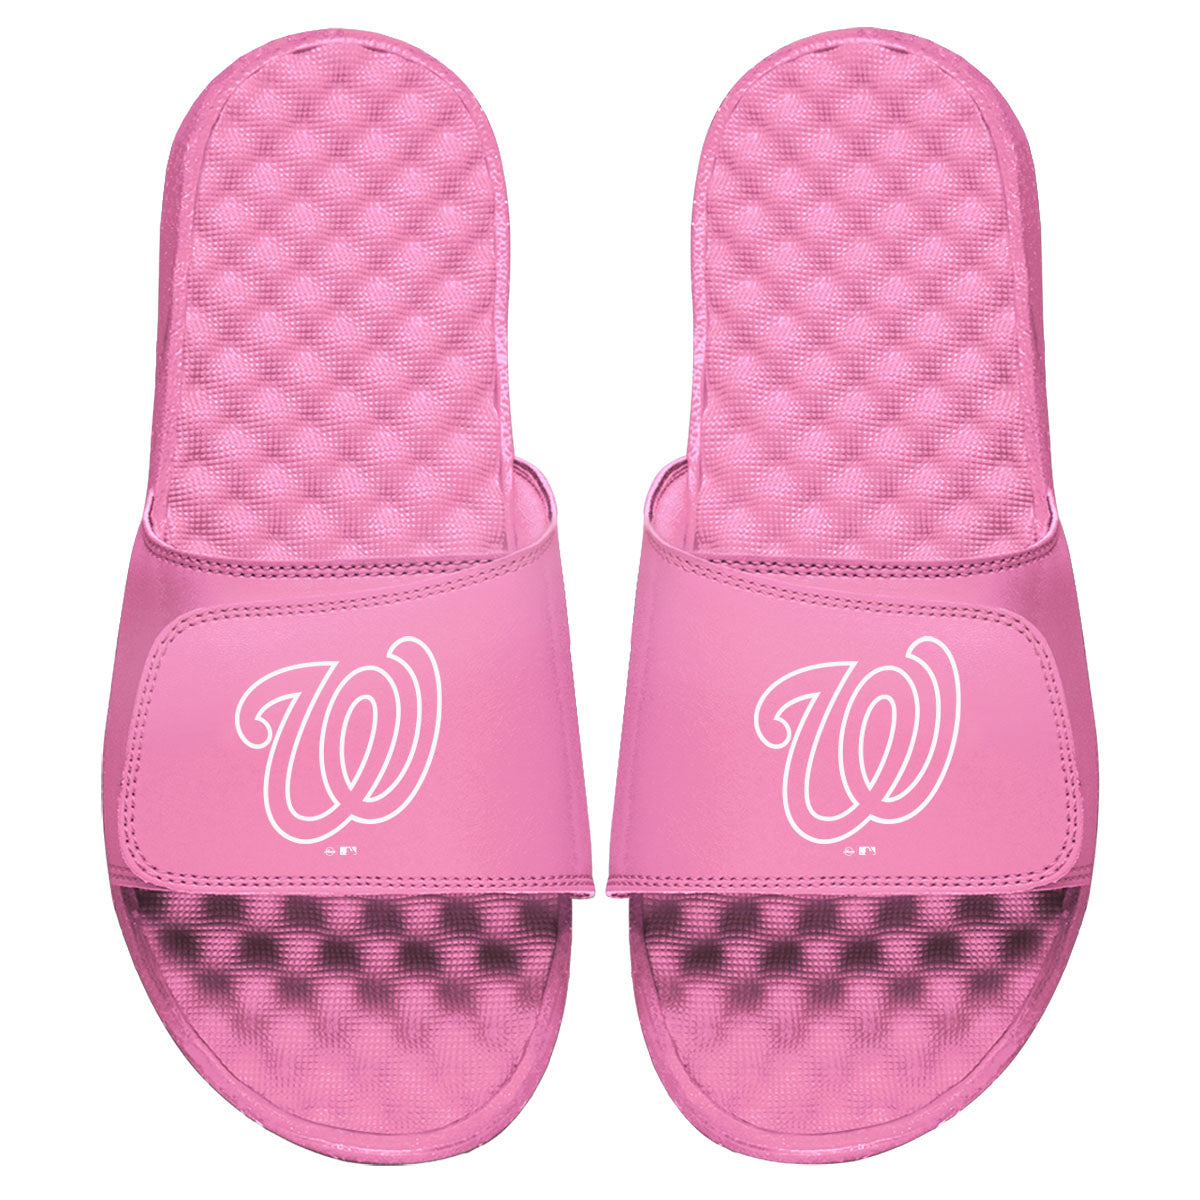 Washington Nationals Primary Pink Slides